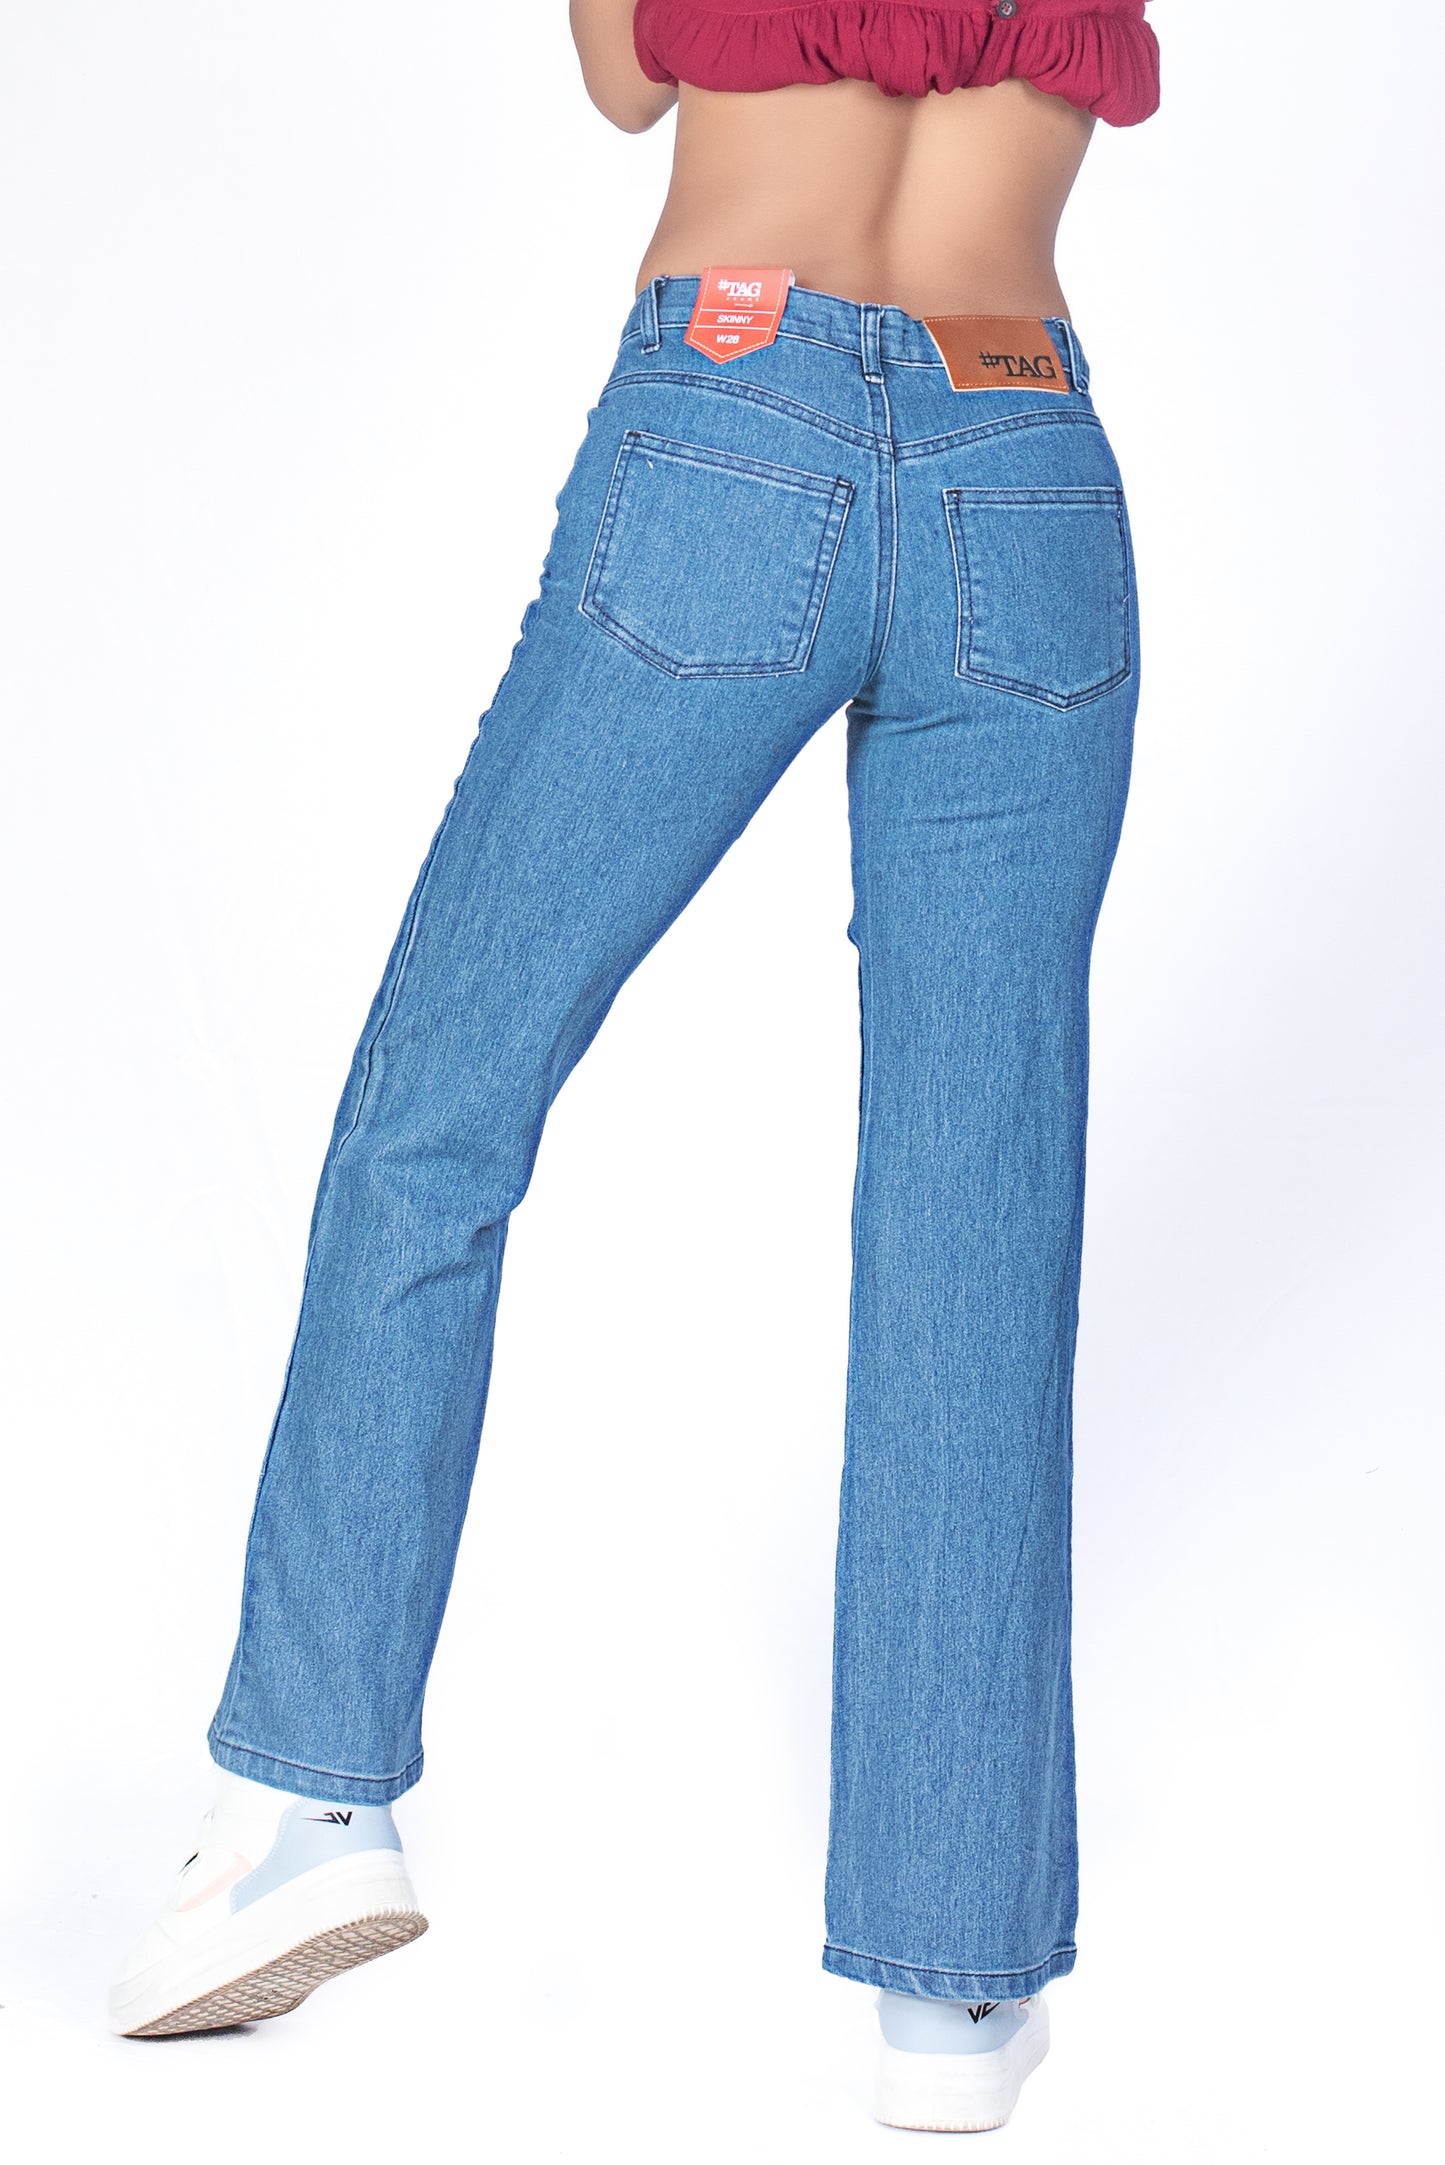 Ladies Flared Jeans - Light Blue Wash